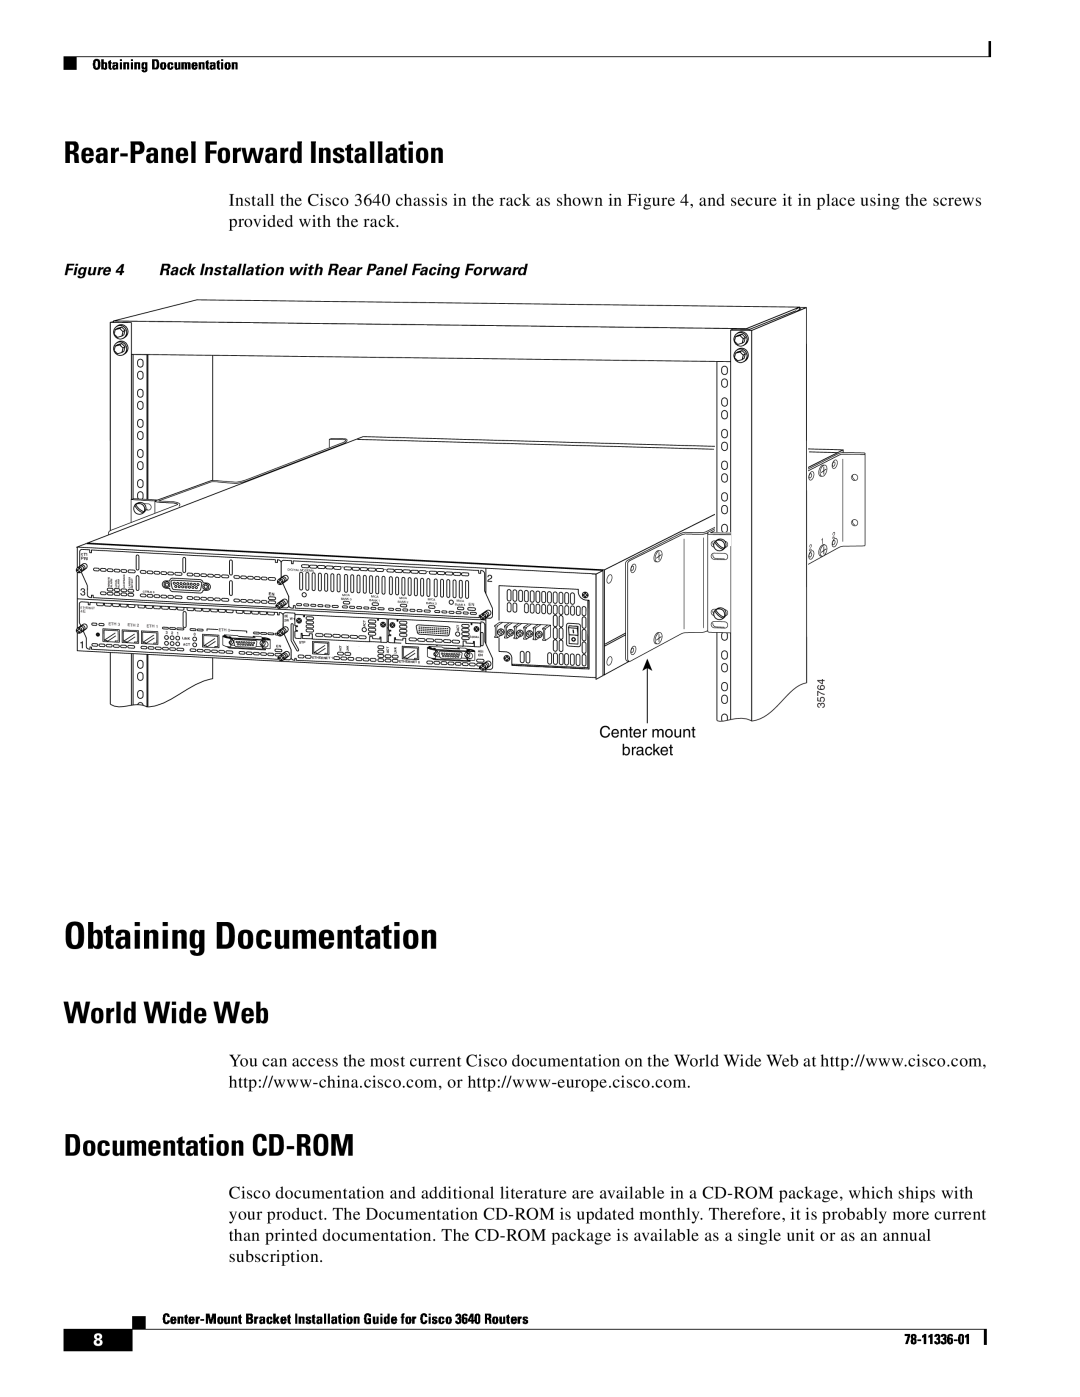 Cisco Systems 3640 manual Obtaining Documentation, World Wide Web, Documentation CD-ROM, Rear-Panel Forward Installation 